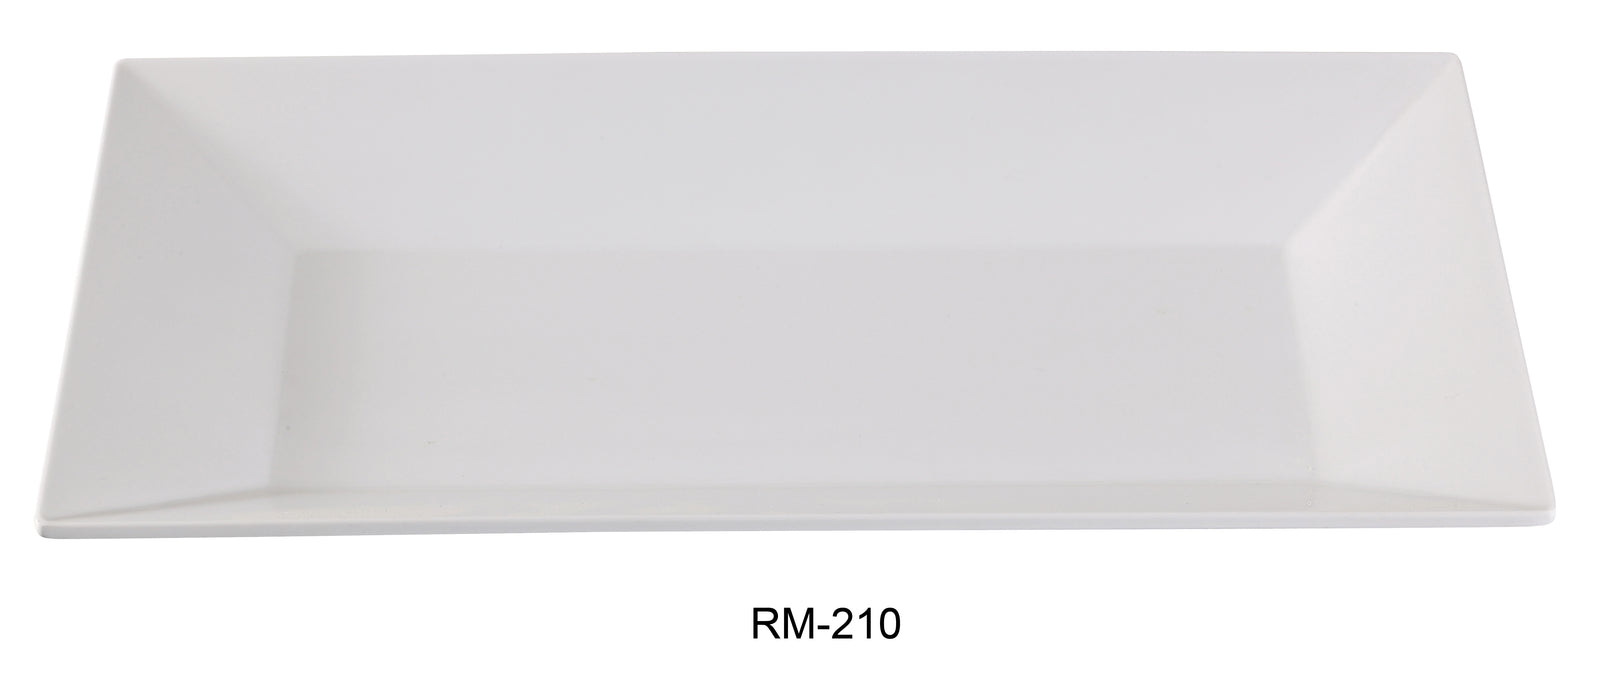 Yanco Rome RM-210 Rectangular Plate, Melamine, Pack of 24 (2 Dz)